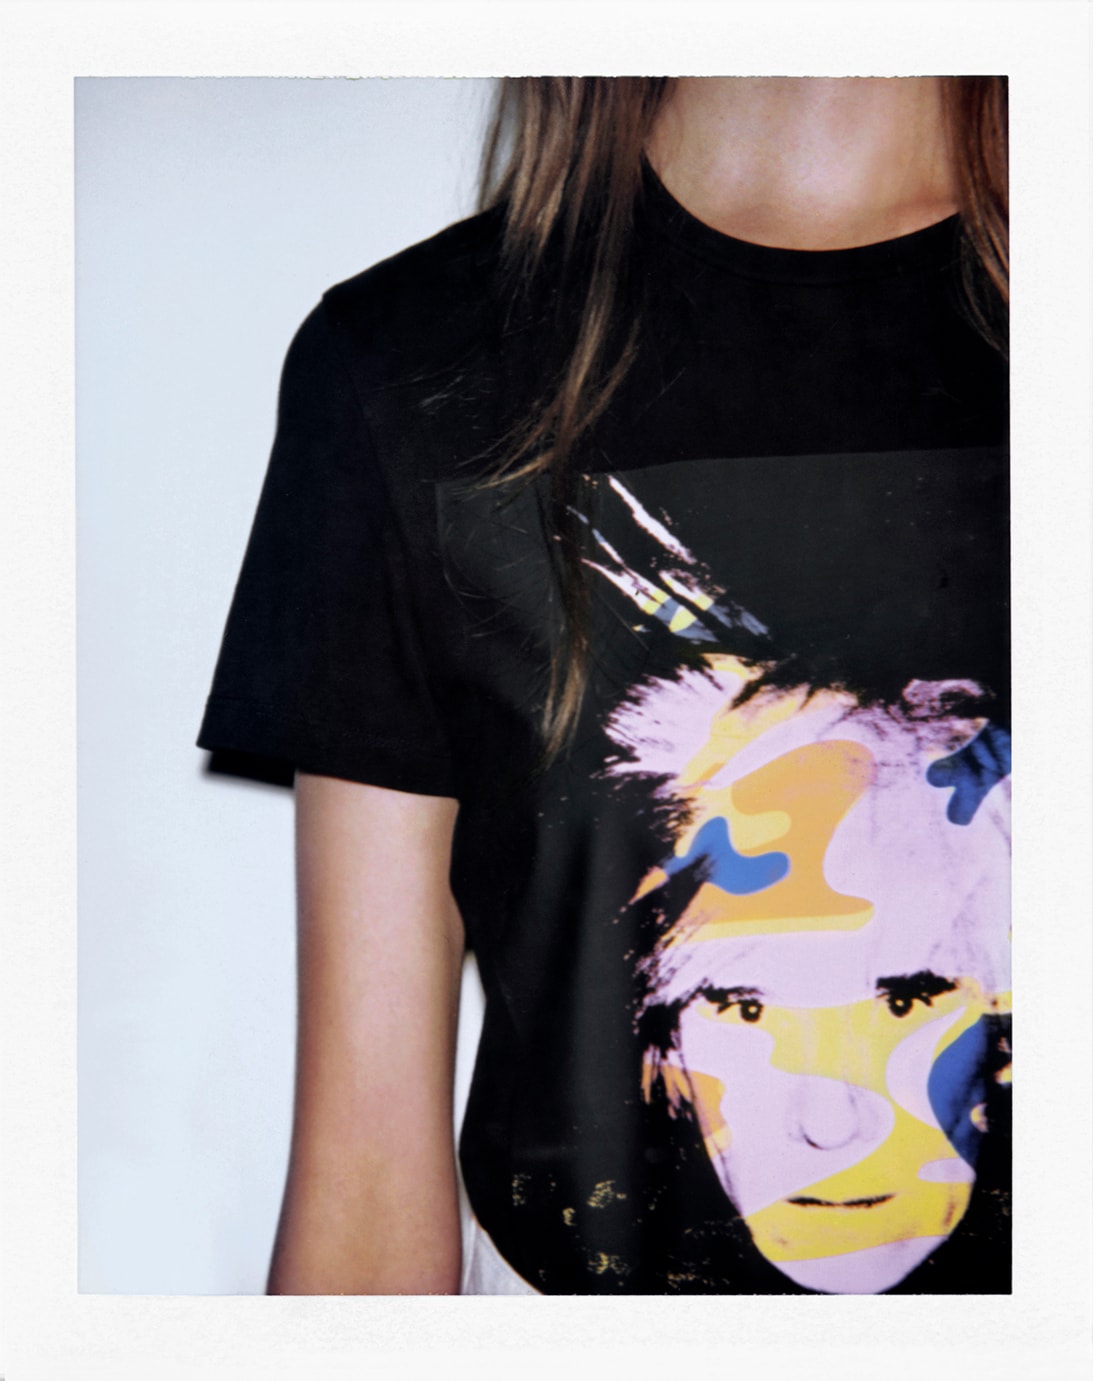 Calvin Klein Jeans x Andy Warhol「Self Portrait」聯名別注系列登場